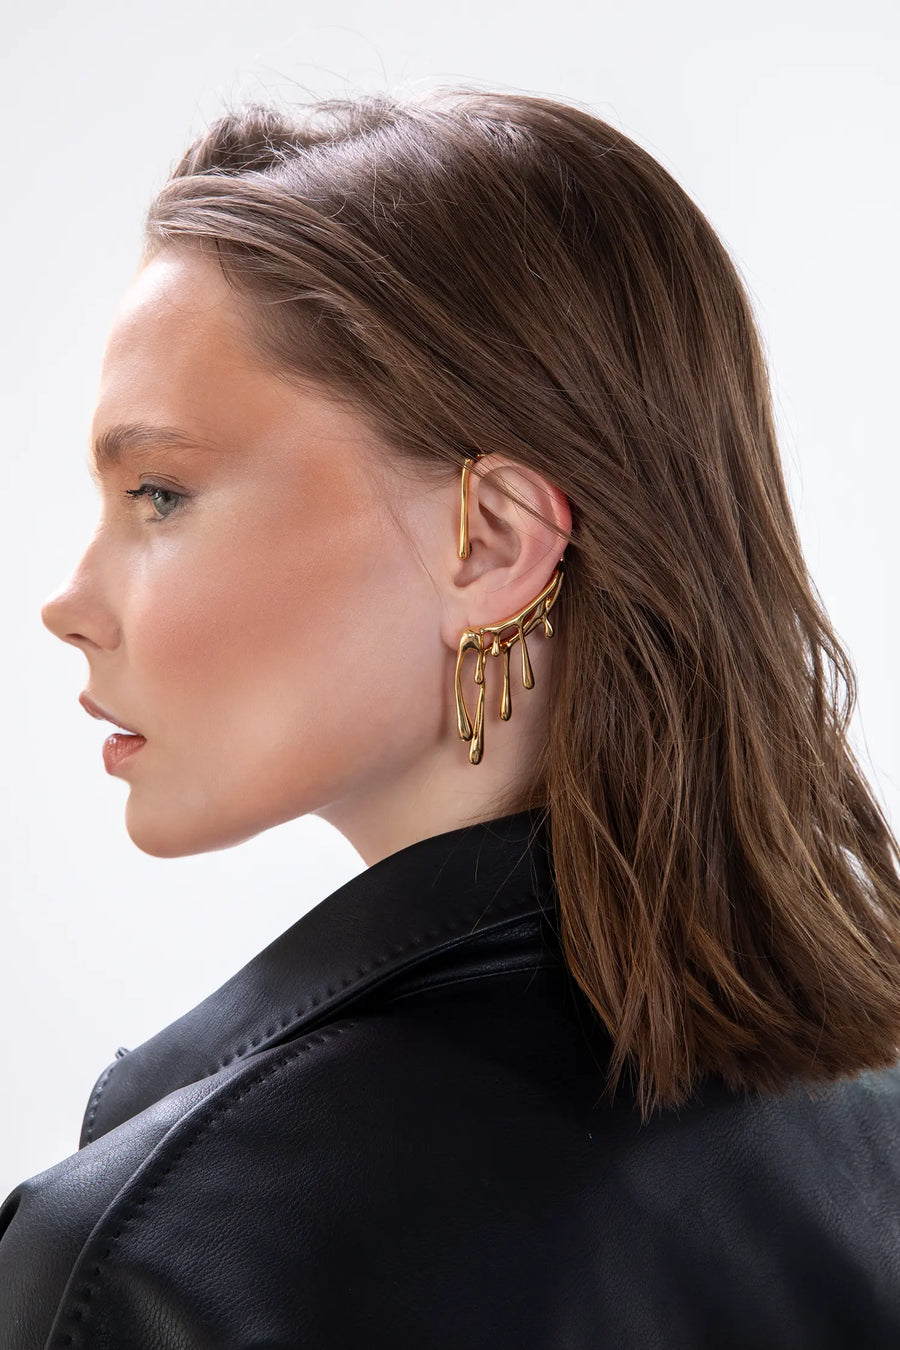 MARVEL Single Earring. Ear hugger with a pin for pierced ear, single earring for left ear, 18K gold vermeil, handmade, hypoallergenic, water-resistant